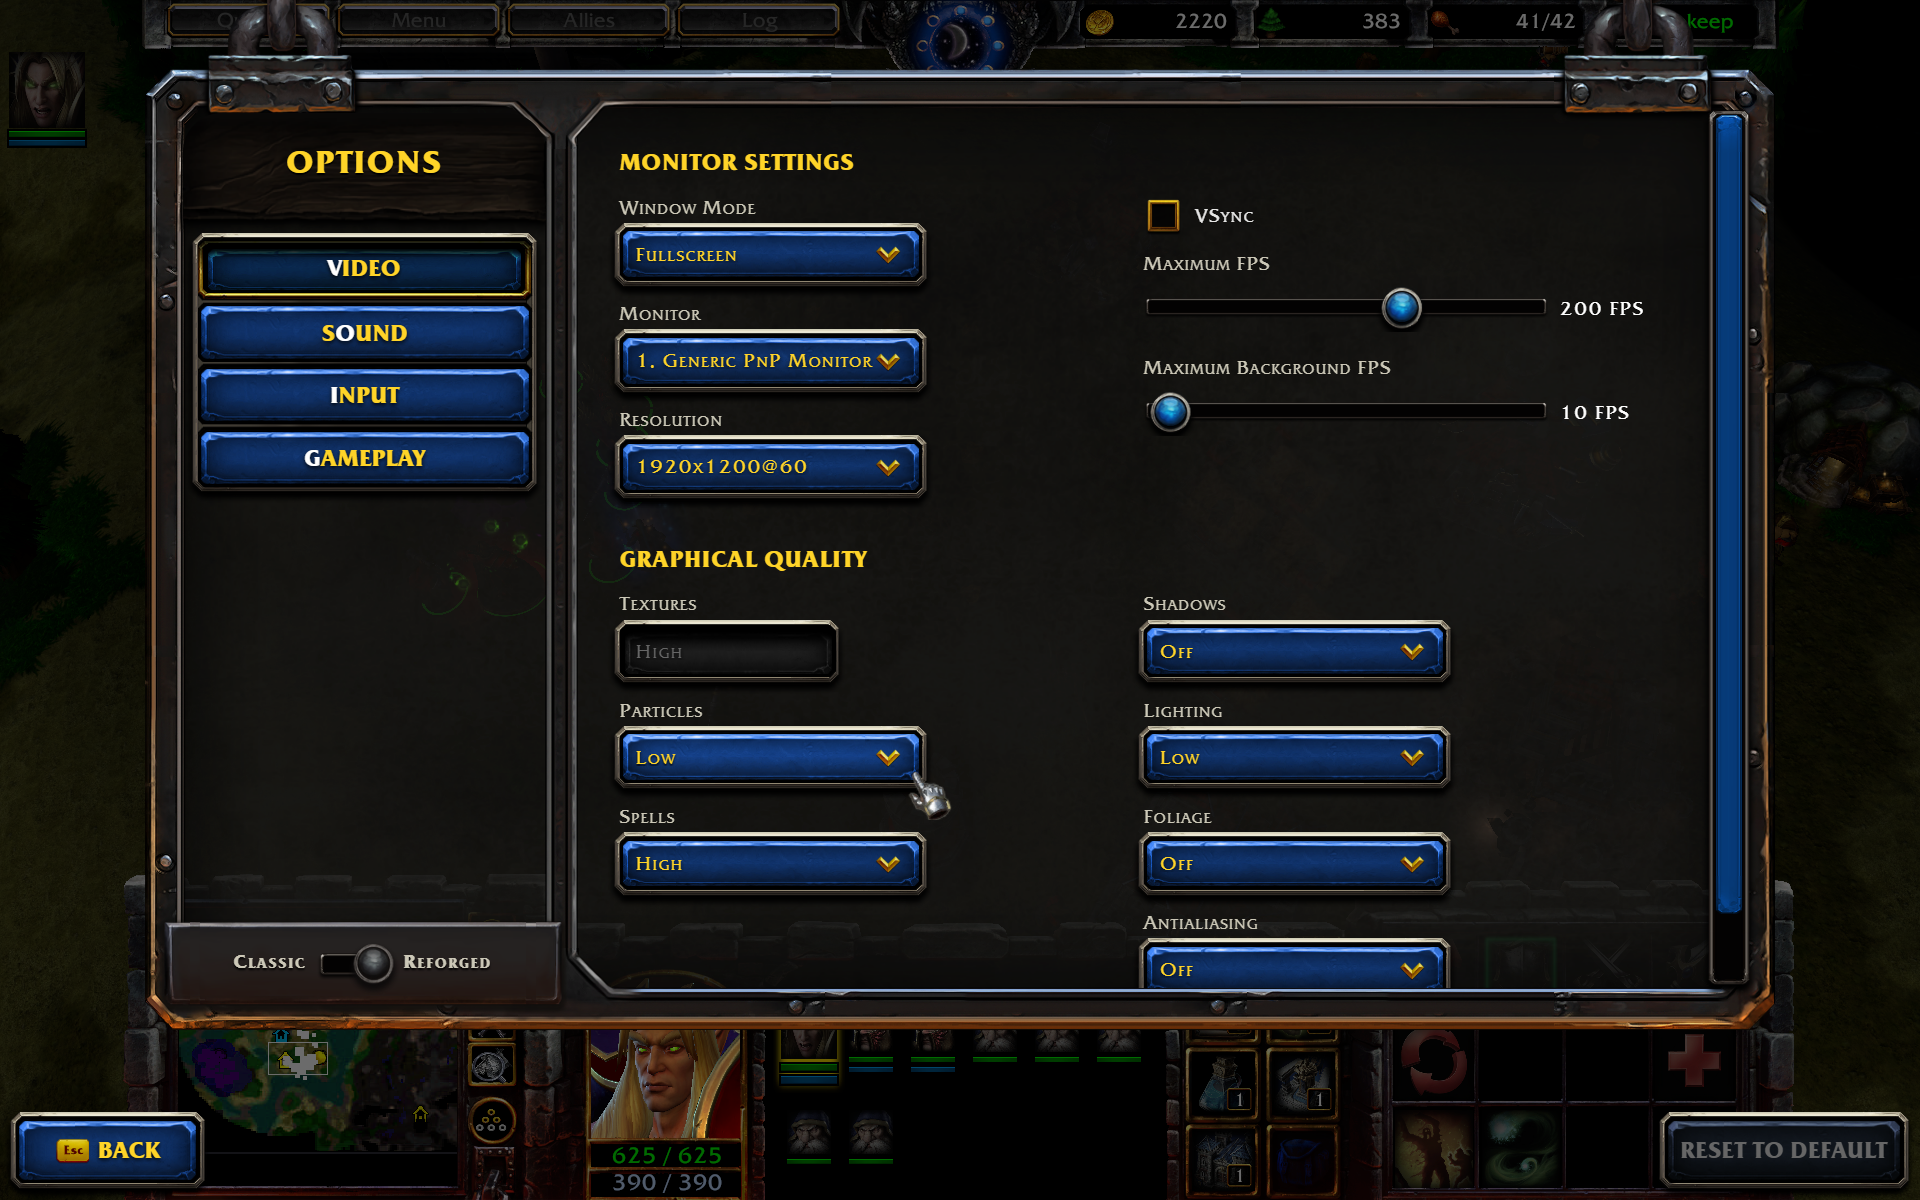 Warcraft 3 graphics options menu